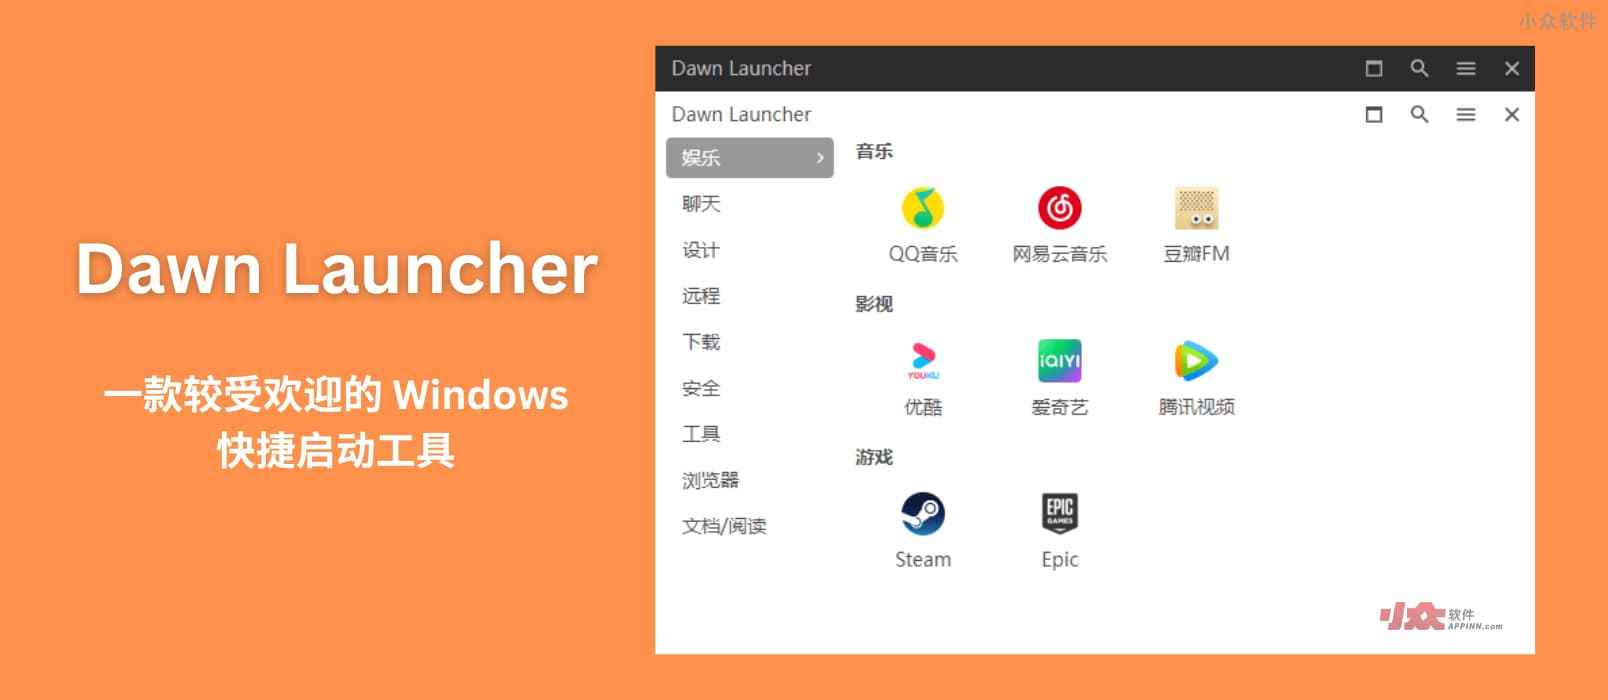 Dawn Launcher - 一款较受欢迎的 Windows 快捷启动工具